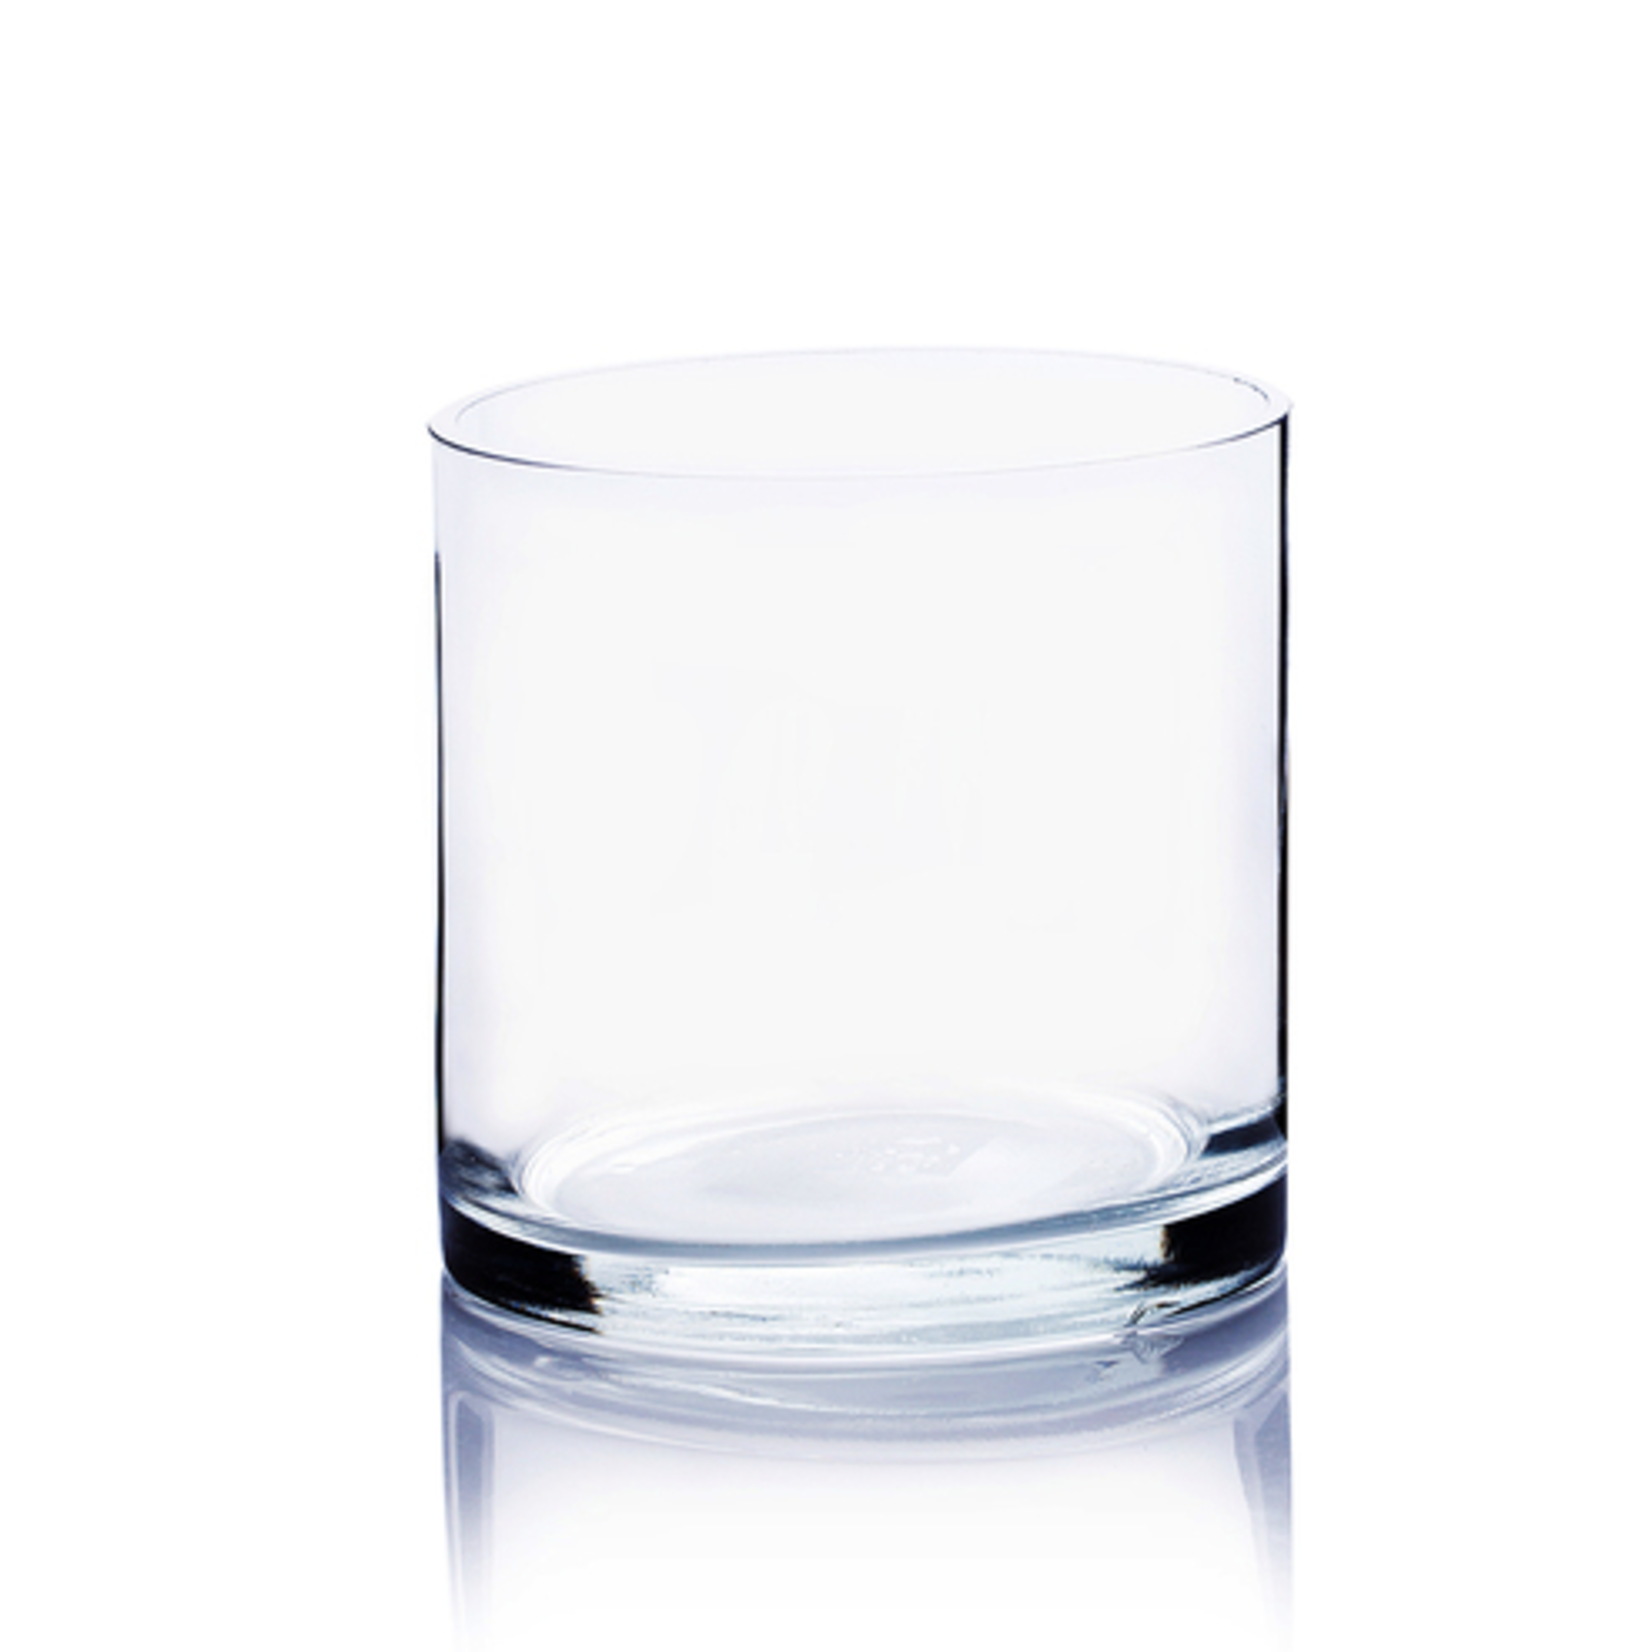 4"h x 4"d CLEAR GLASS CYLINDER VASE